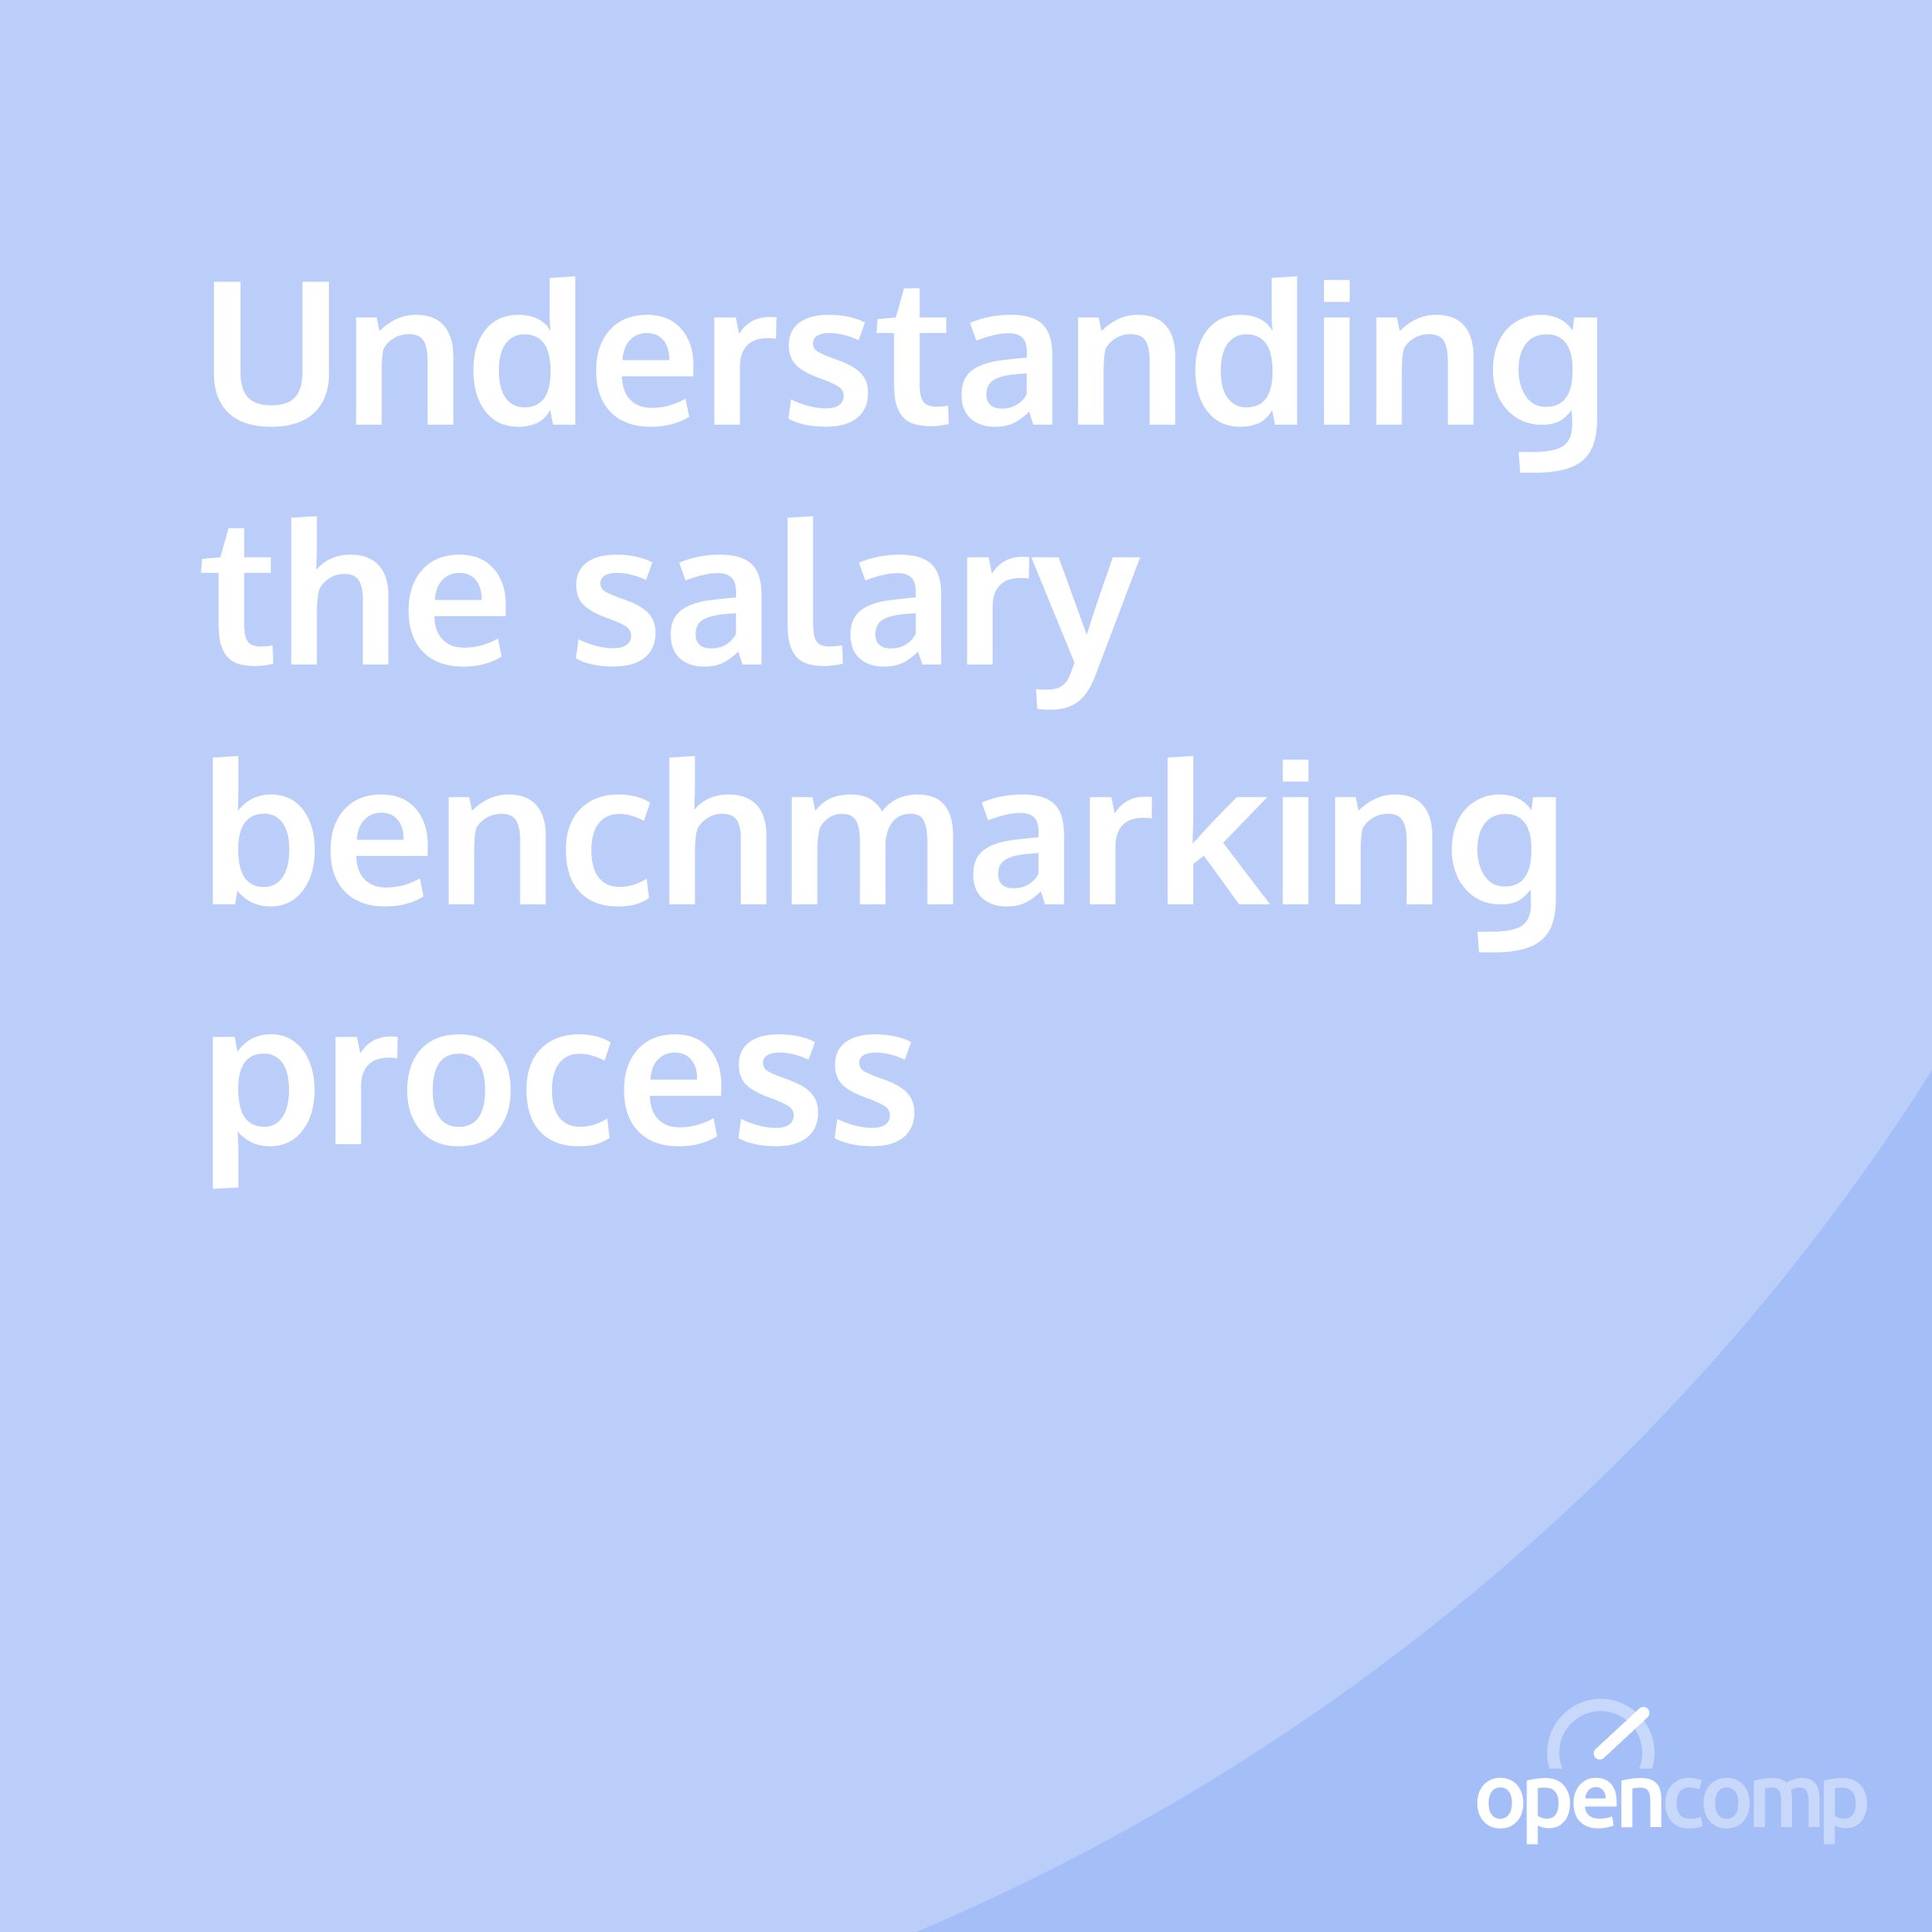 Understanding the salary benchmarking process